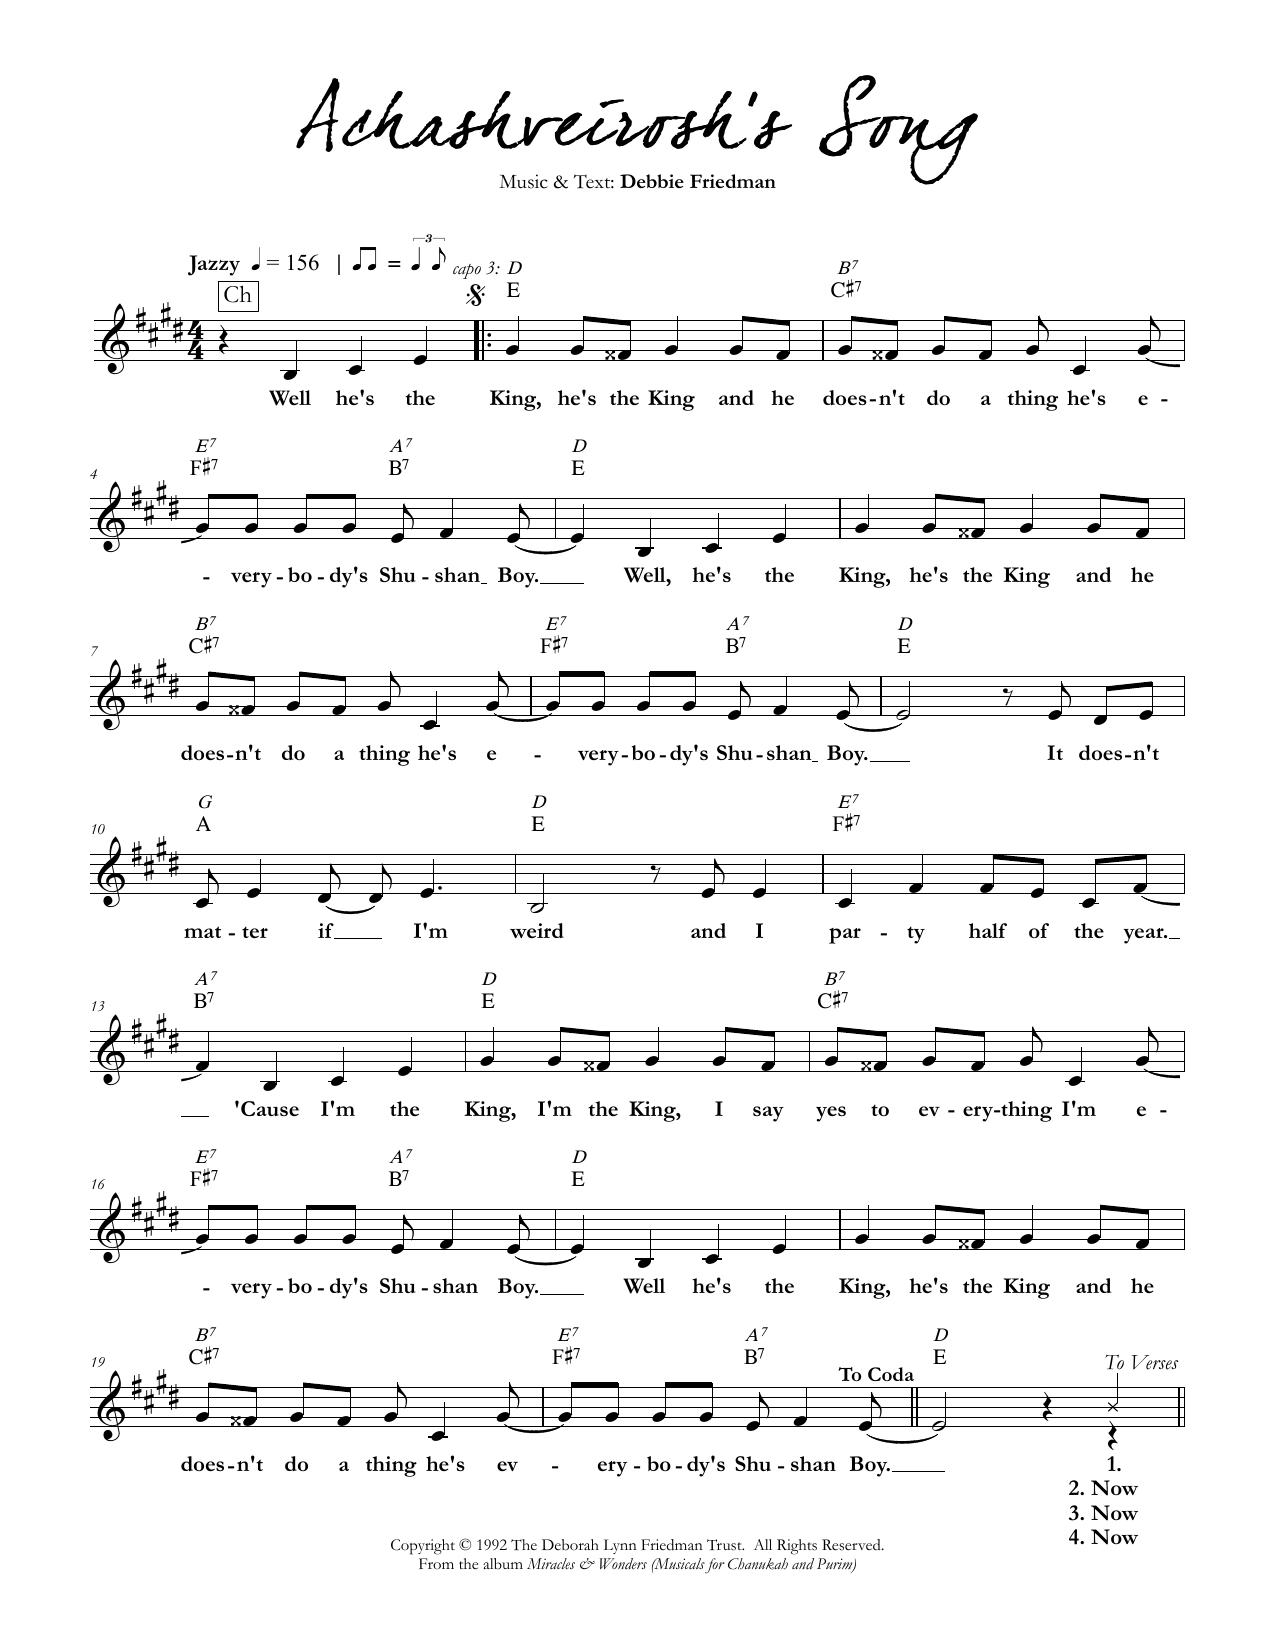 Debbie Friedman Achashveirosh's Song Sheet Music Notes & Chords for Lead Sheet / Fake Book - Download or Print PDF